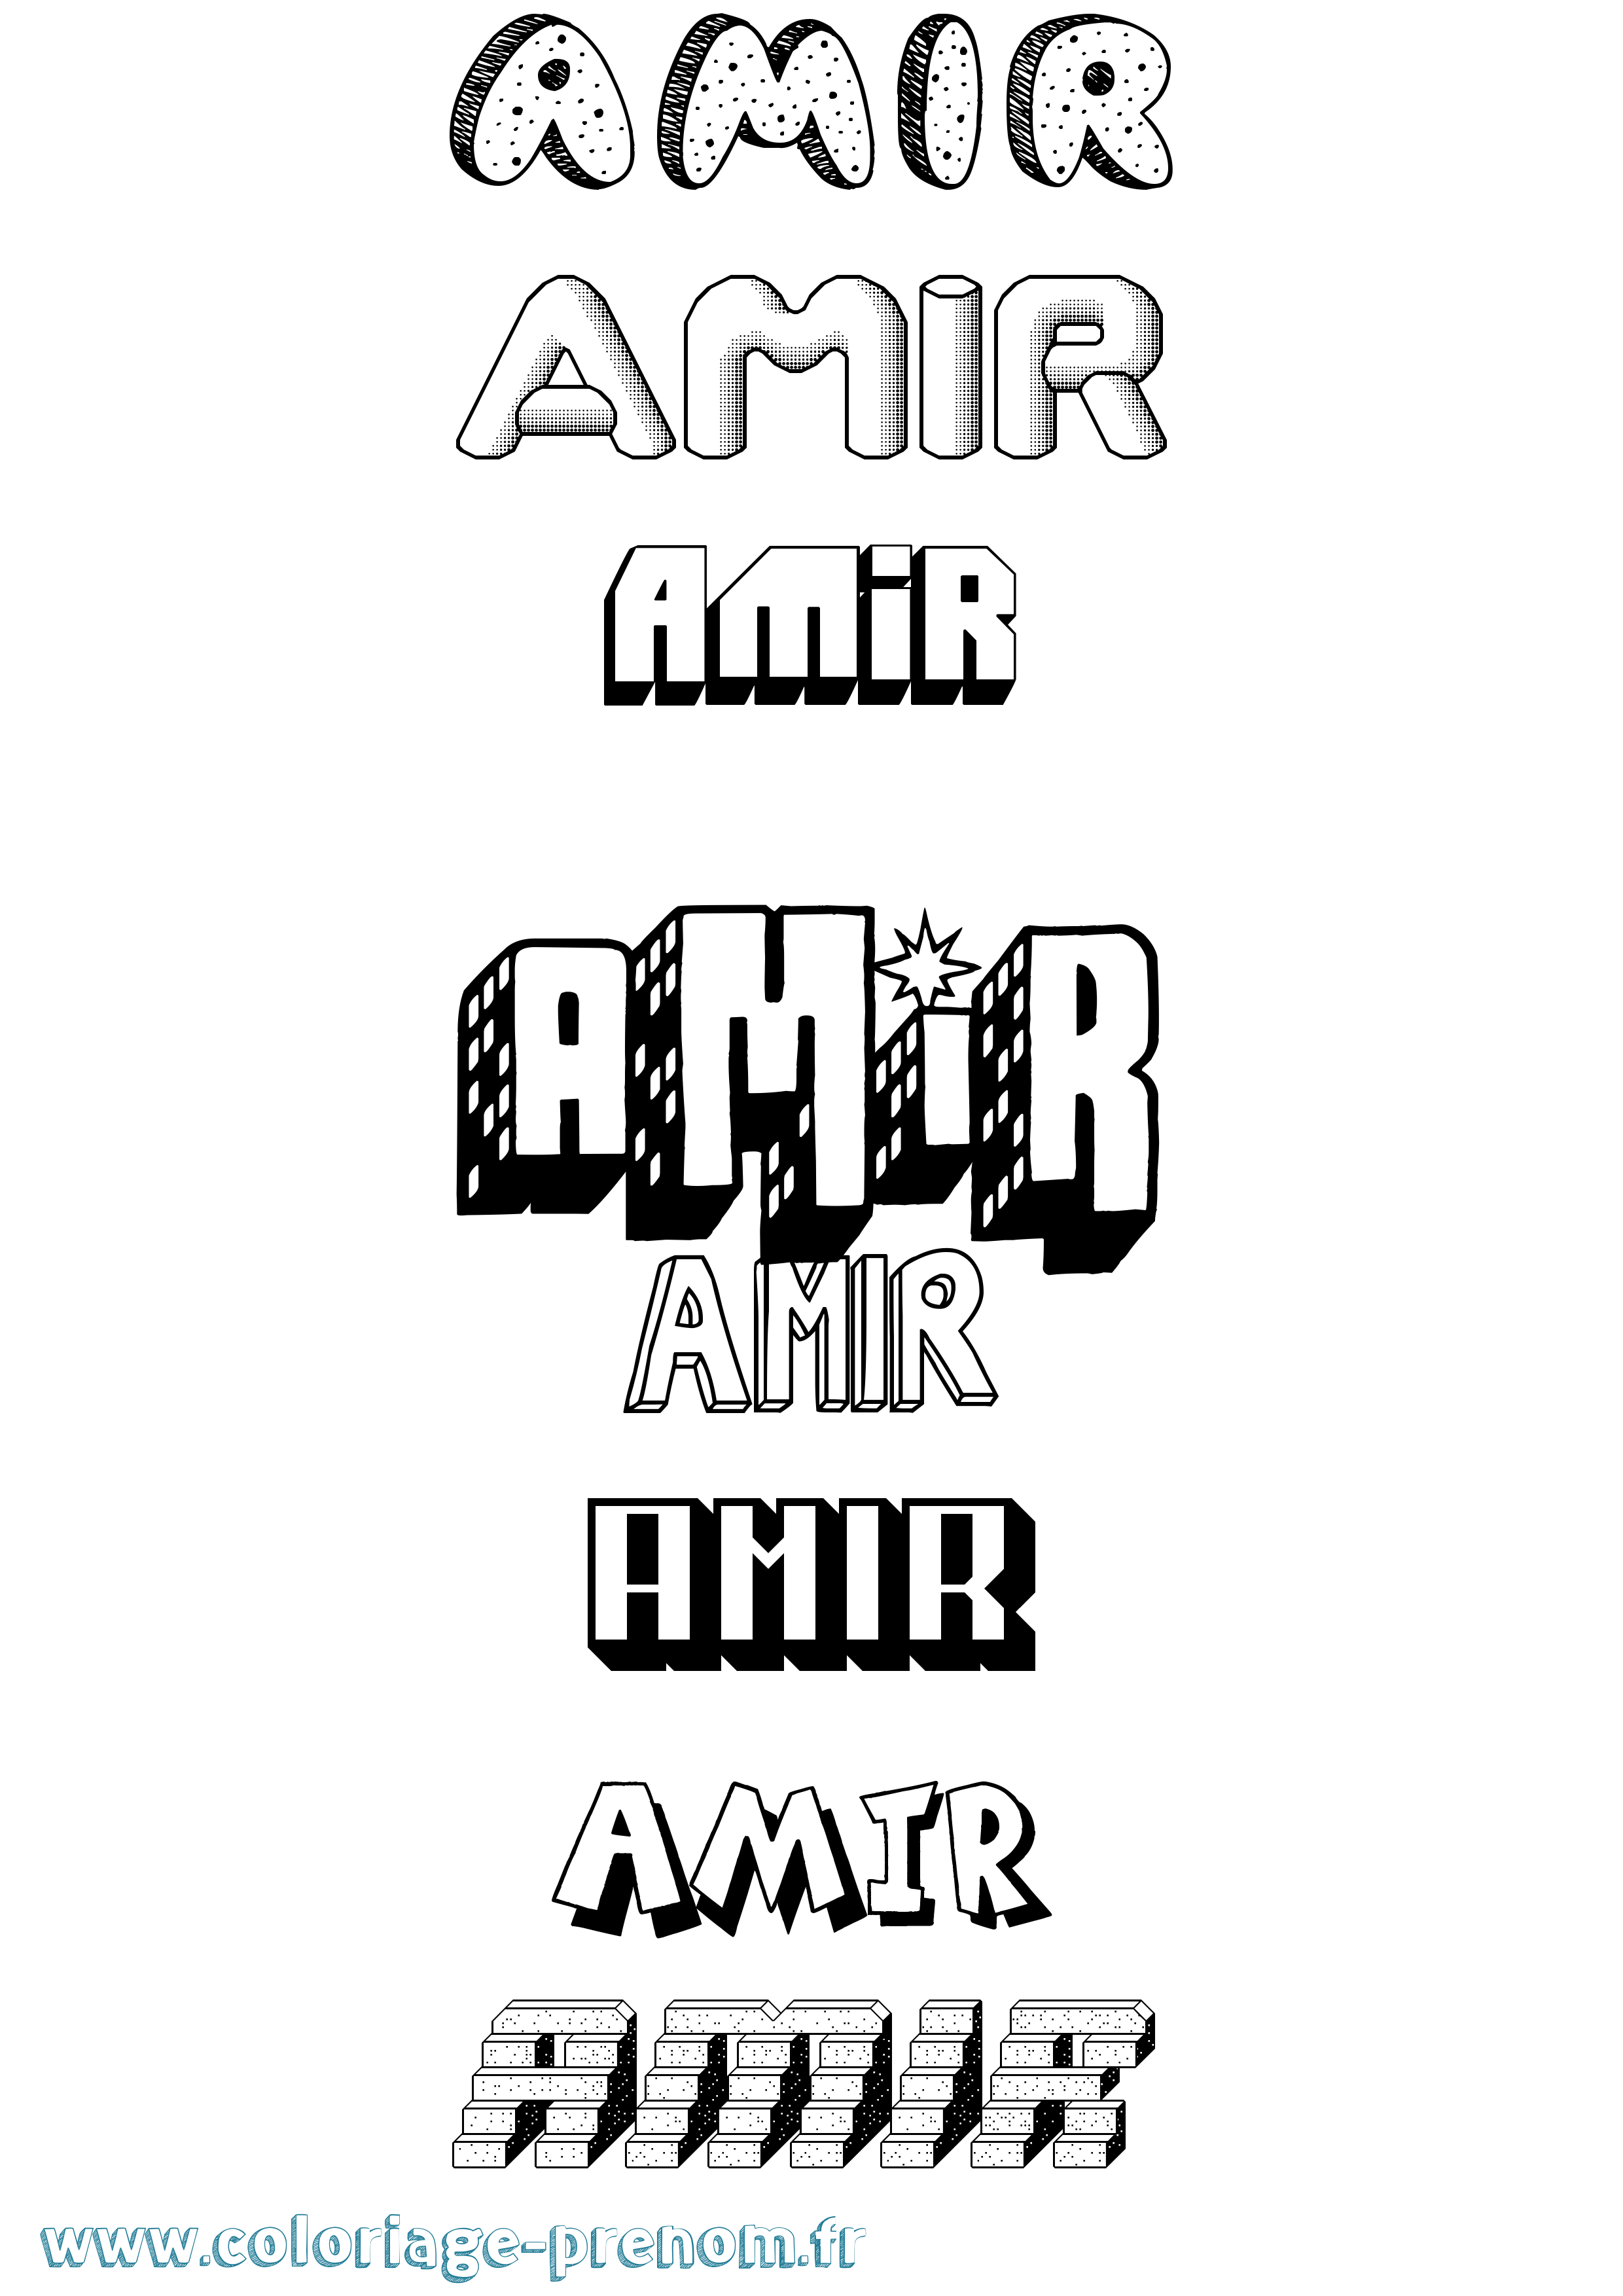 Coloriage prénom Amir